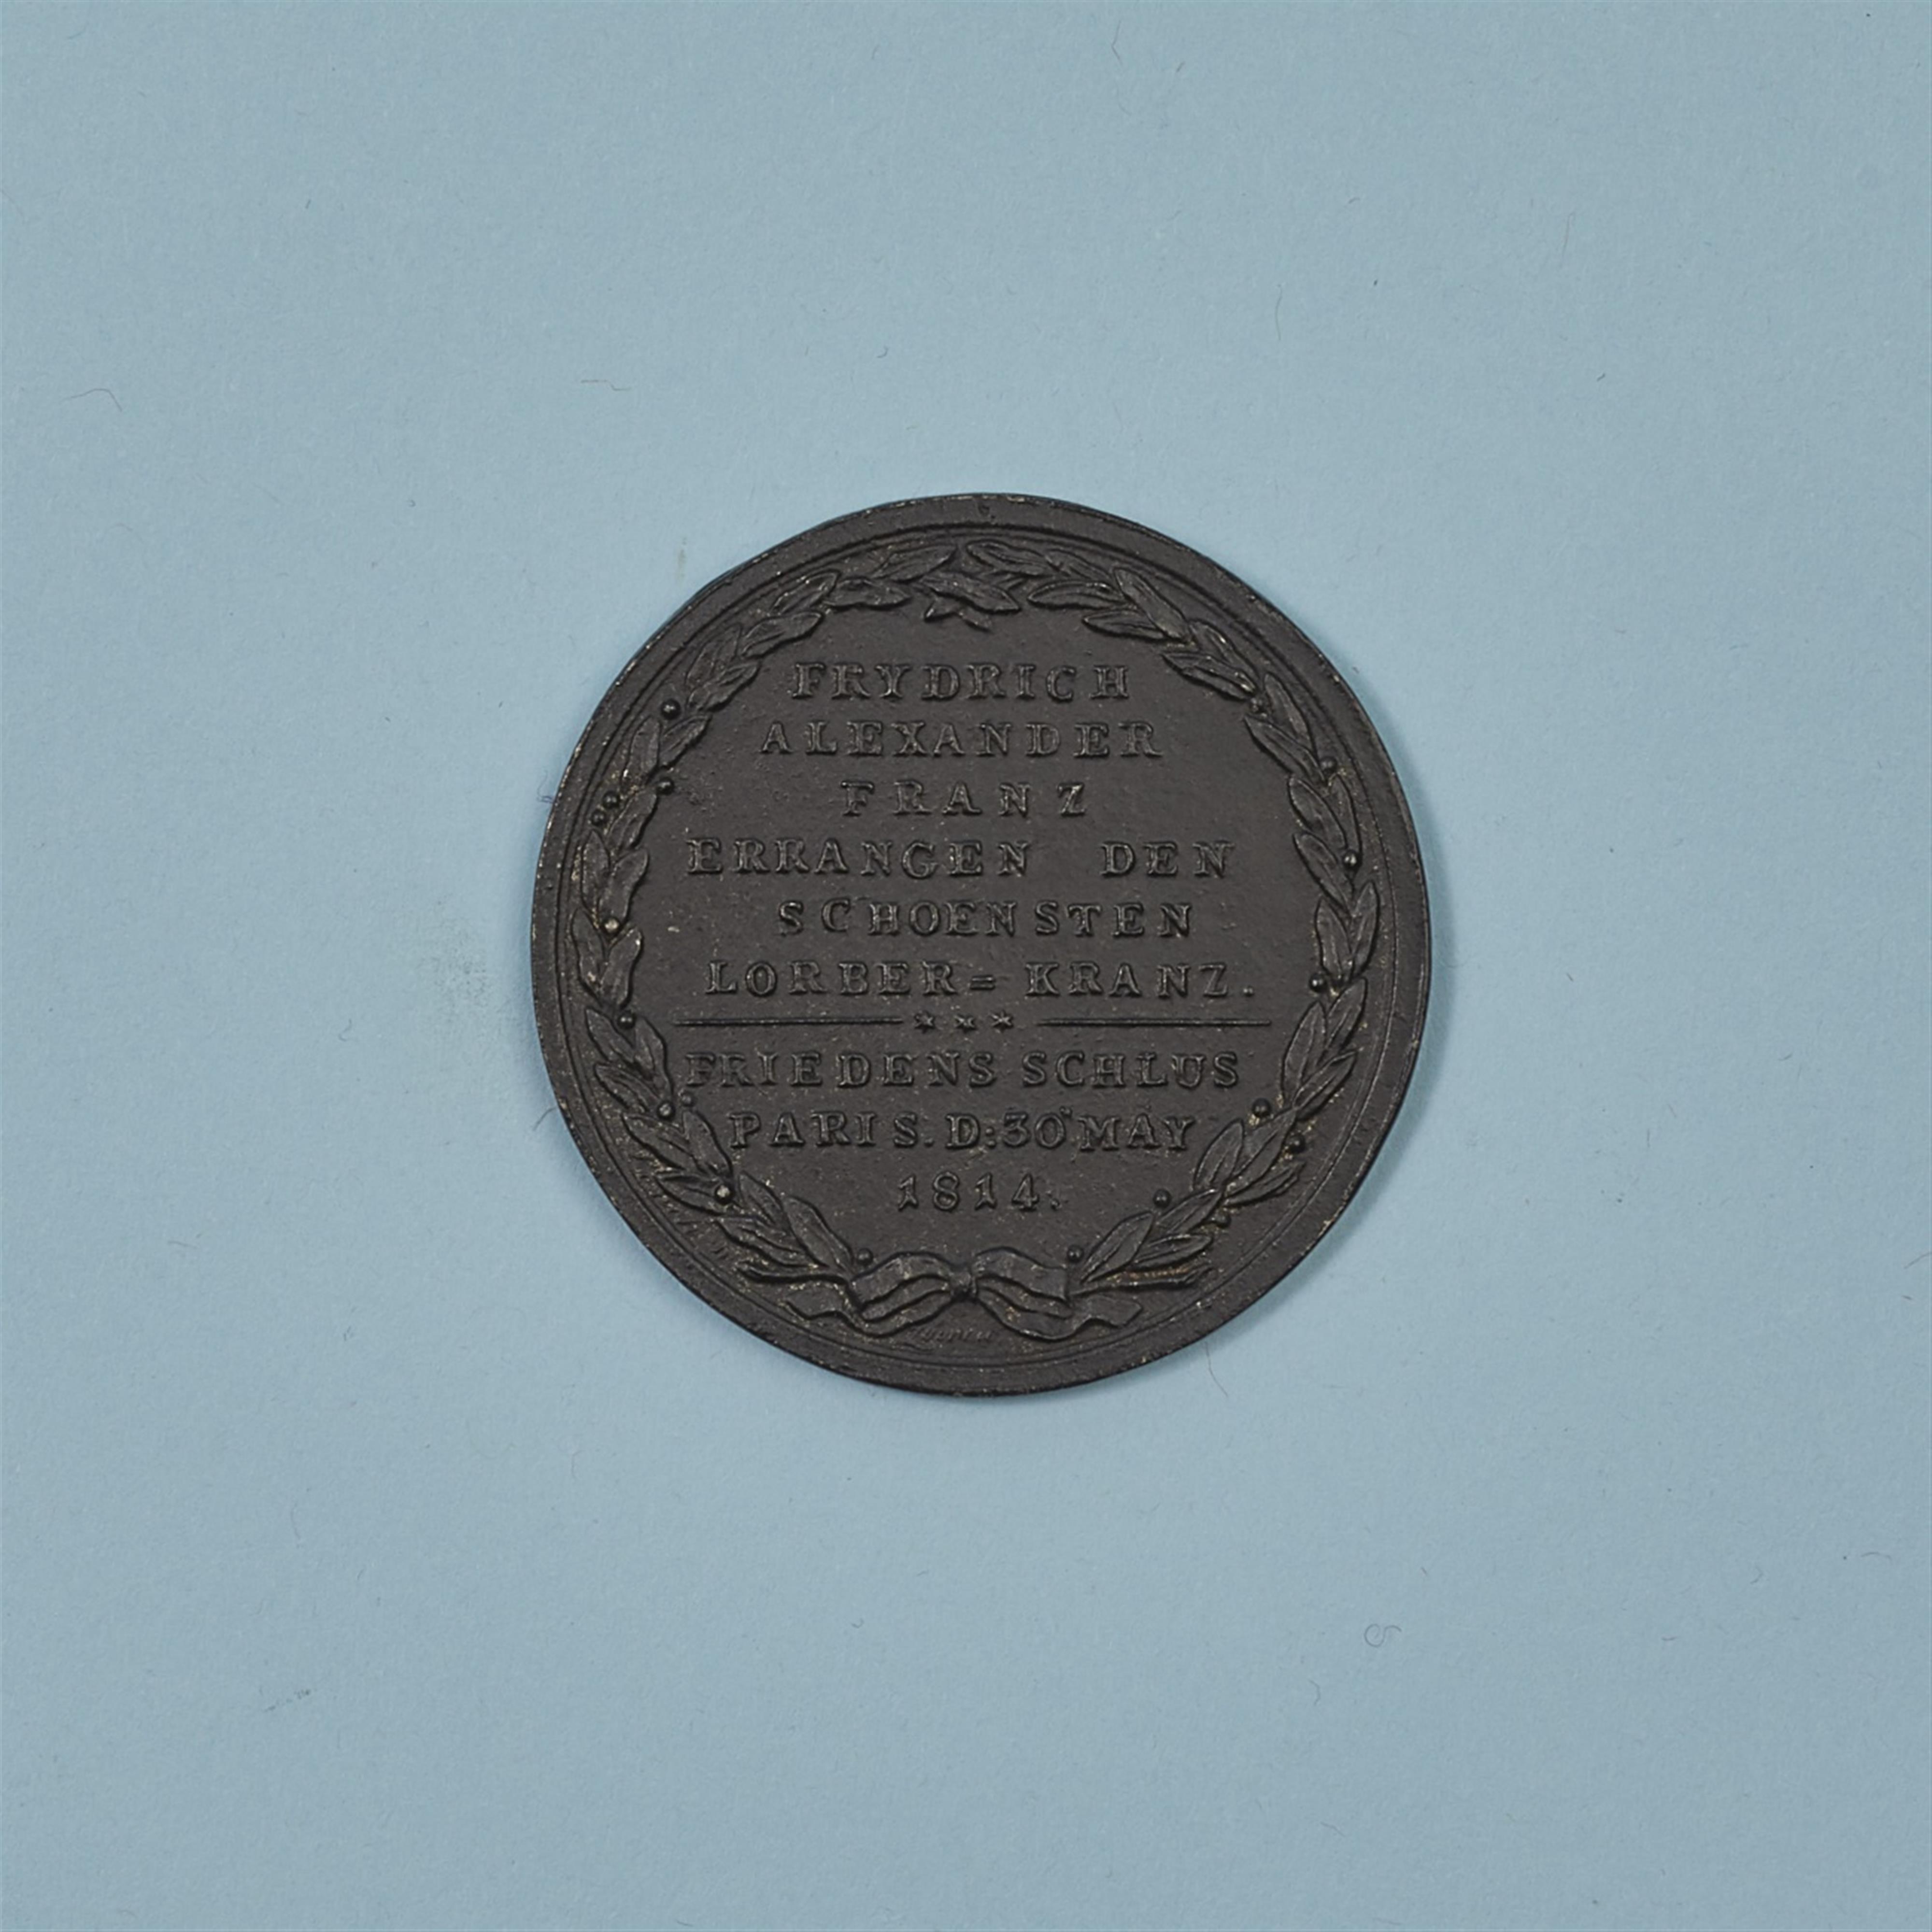 A cast iron medallion "Frydrich, Alexander, Franz errangen den schoensten Lorber-Kranz" - image-1